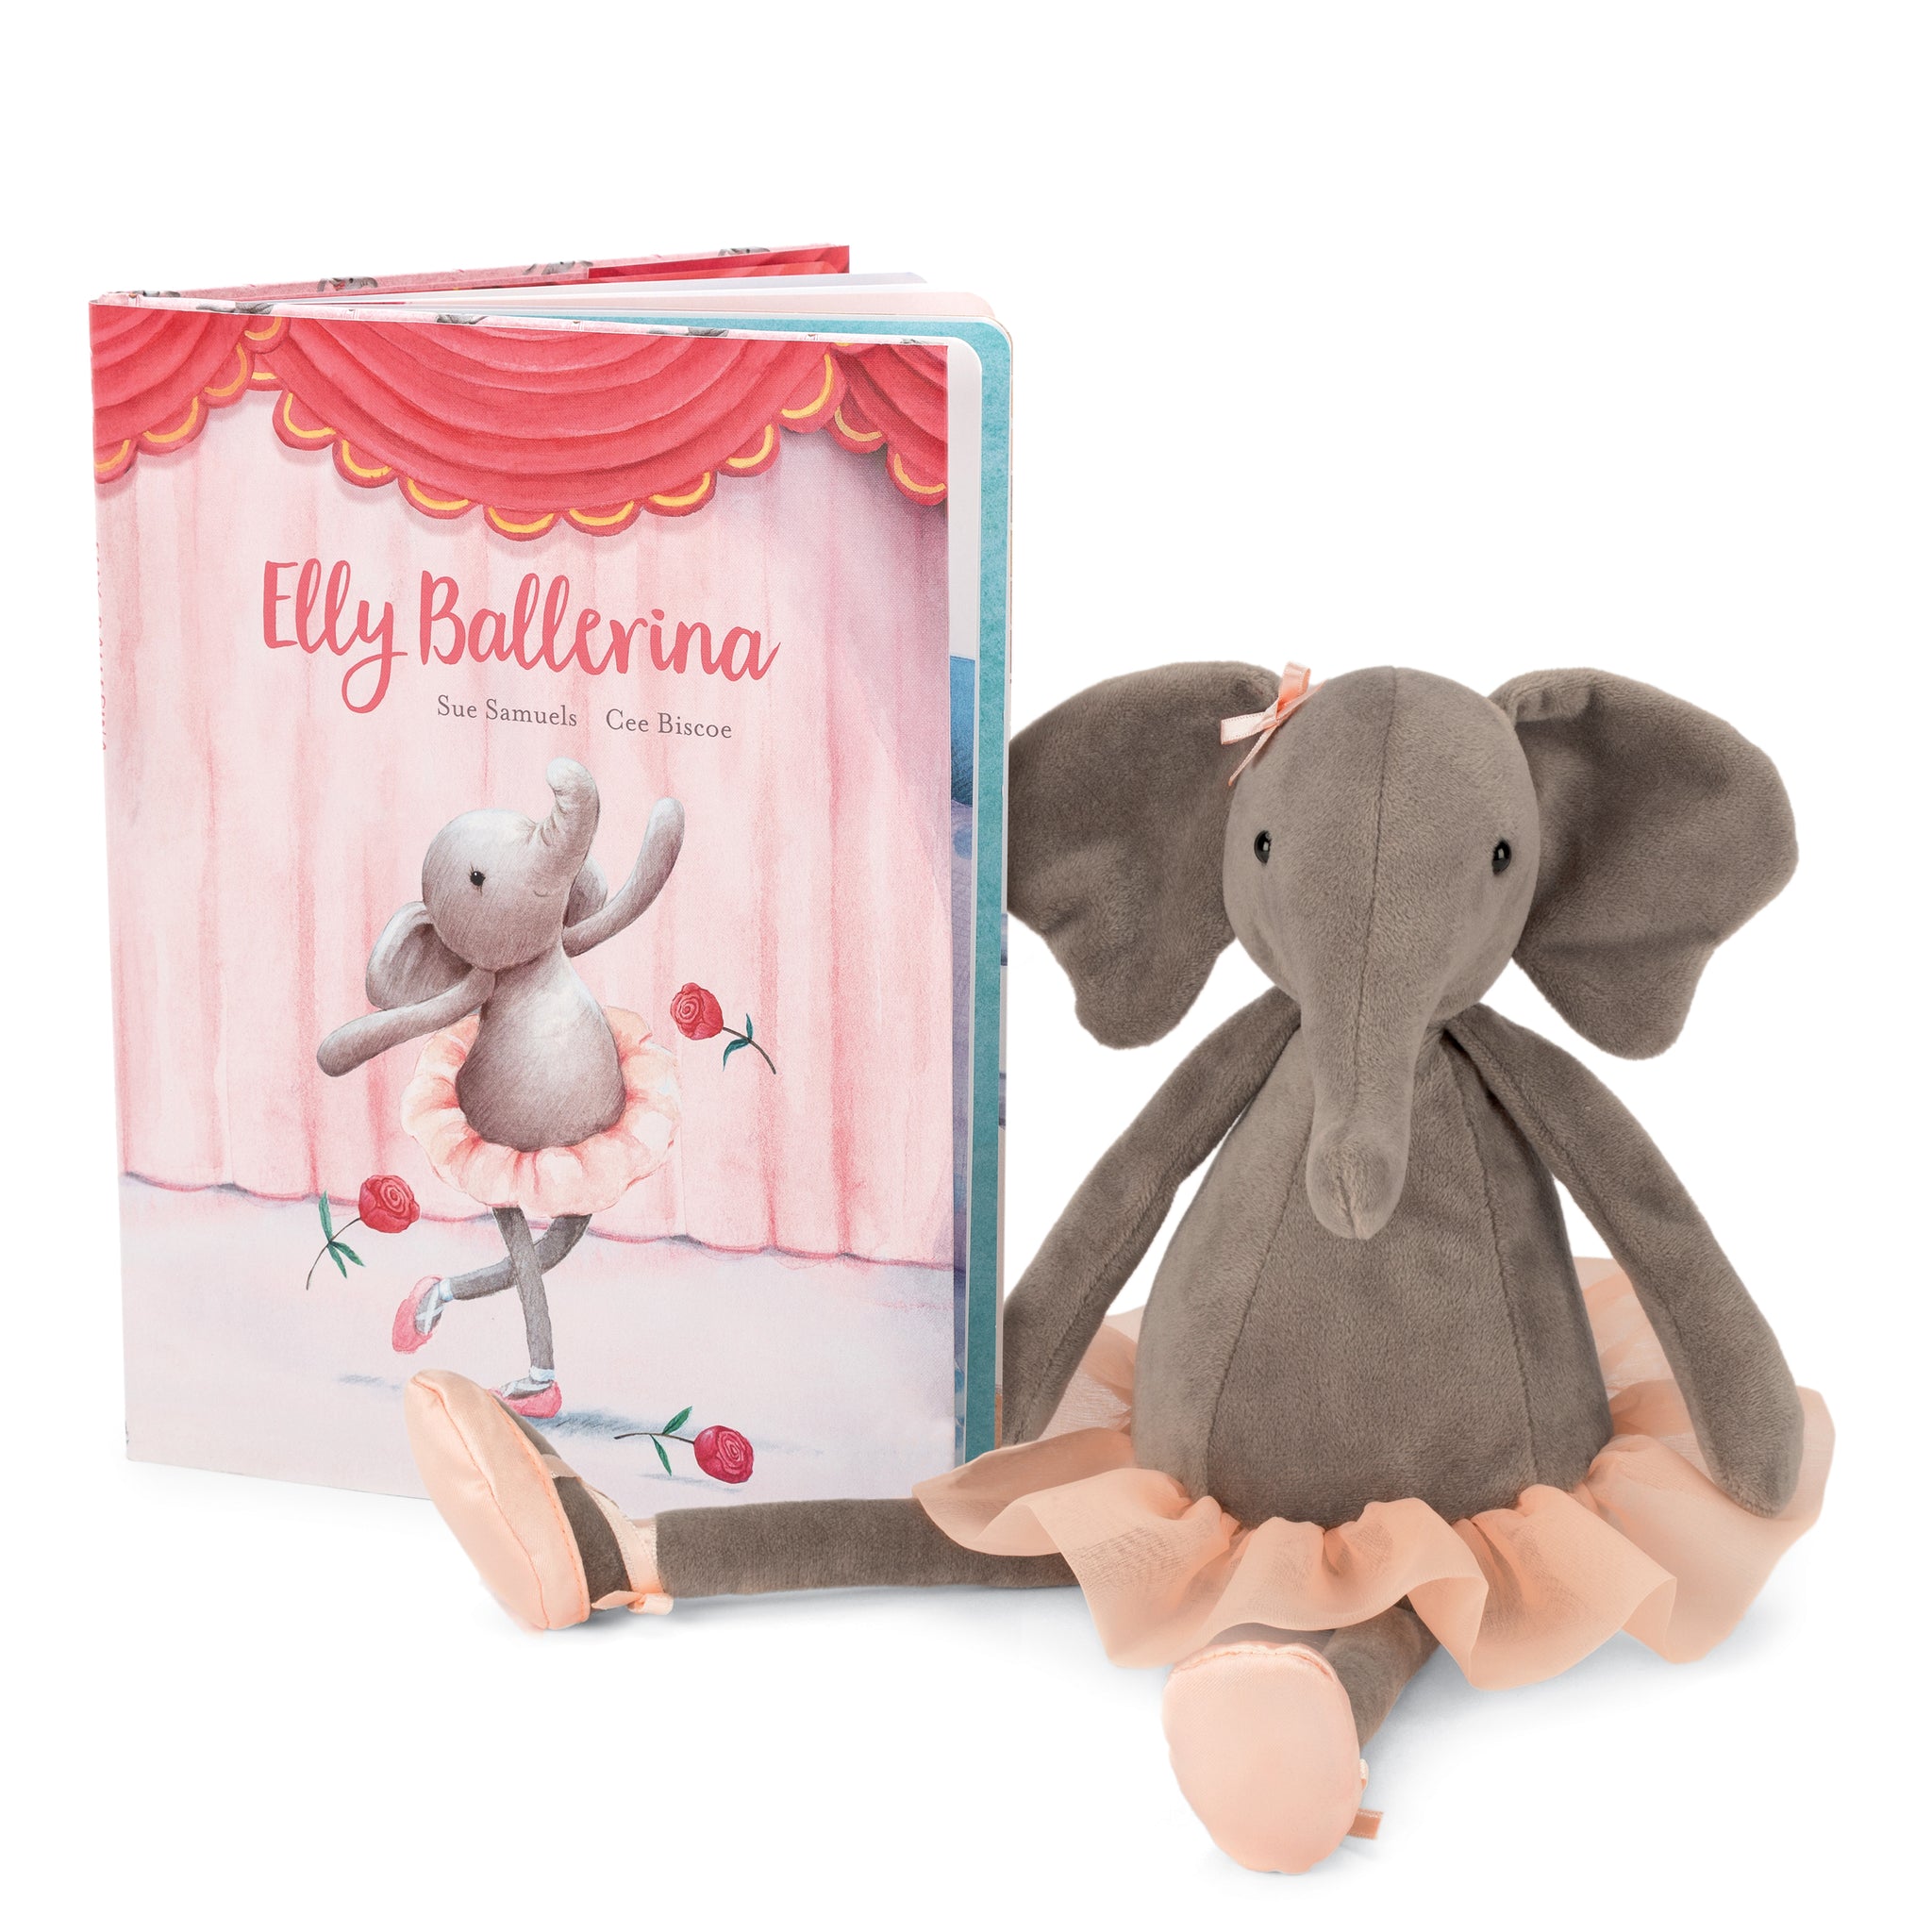 "Elly Ballerina" Book and Elly Elephant Stuffed Animal